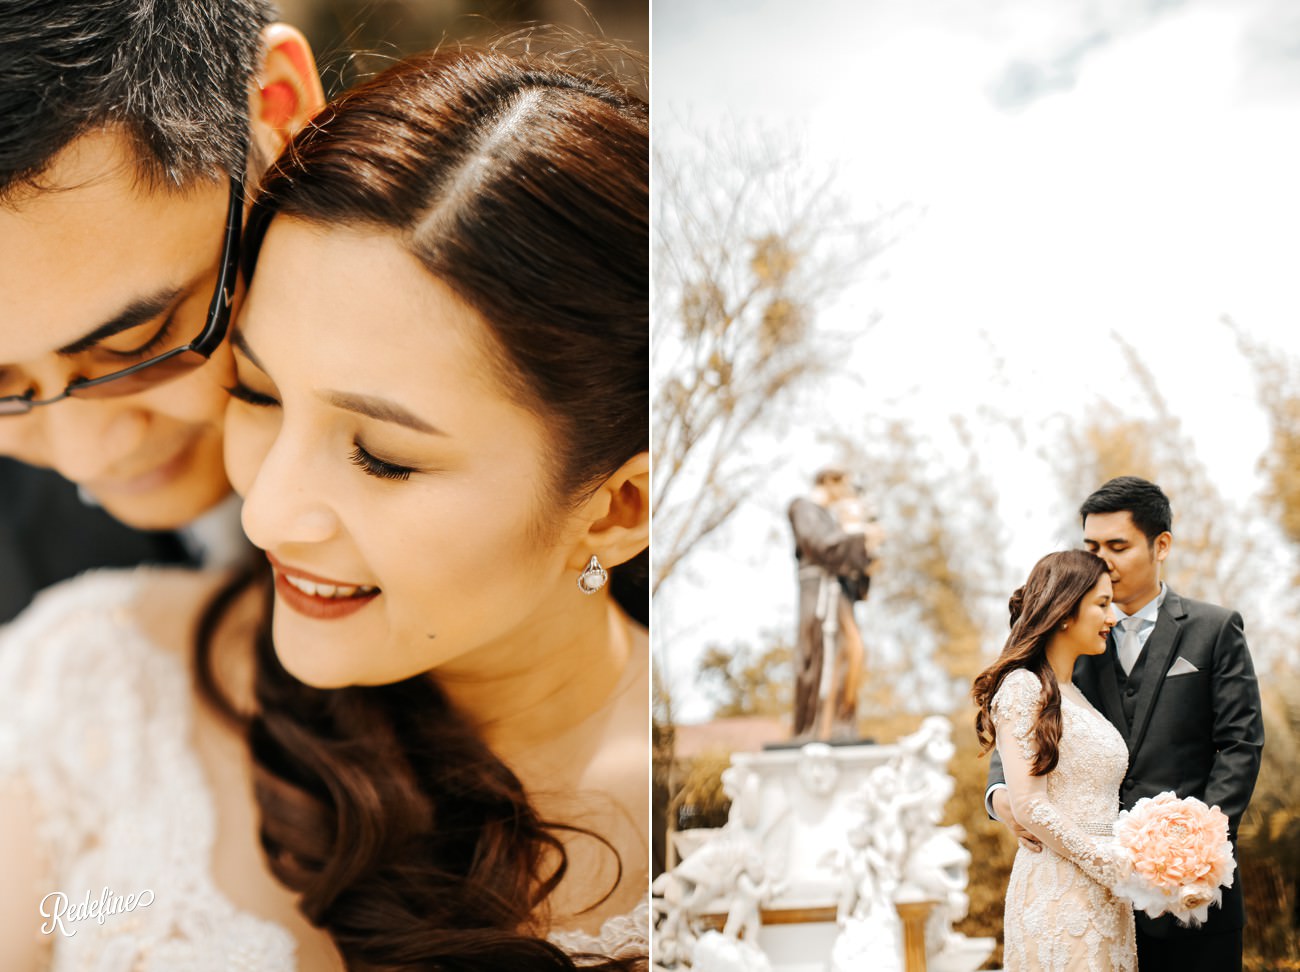 Philippines best elopement photographer based in Manila